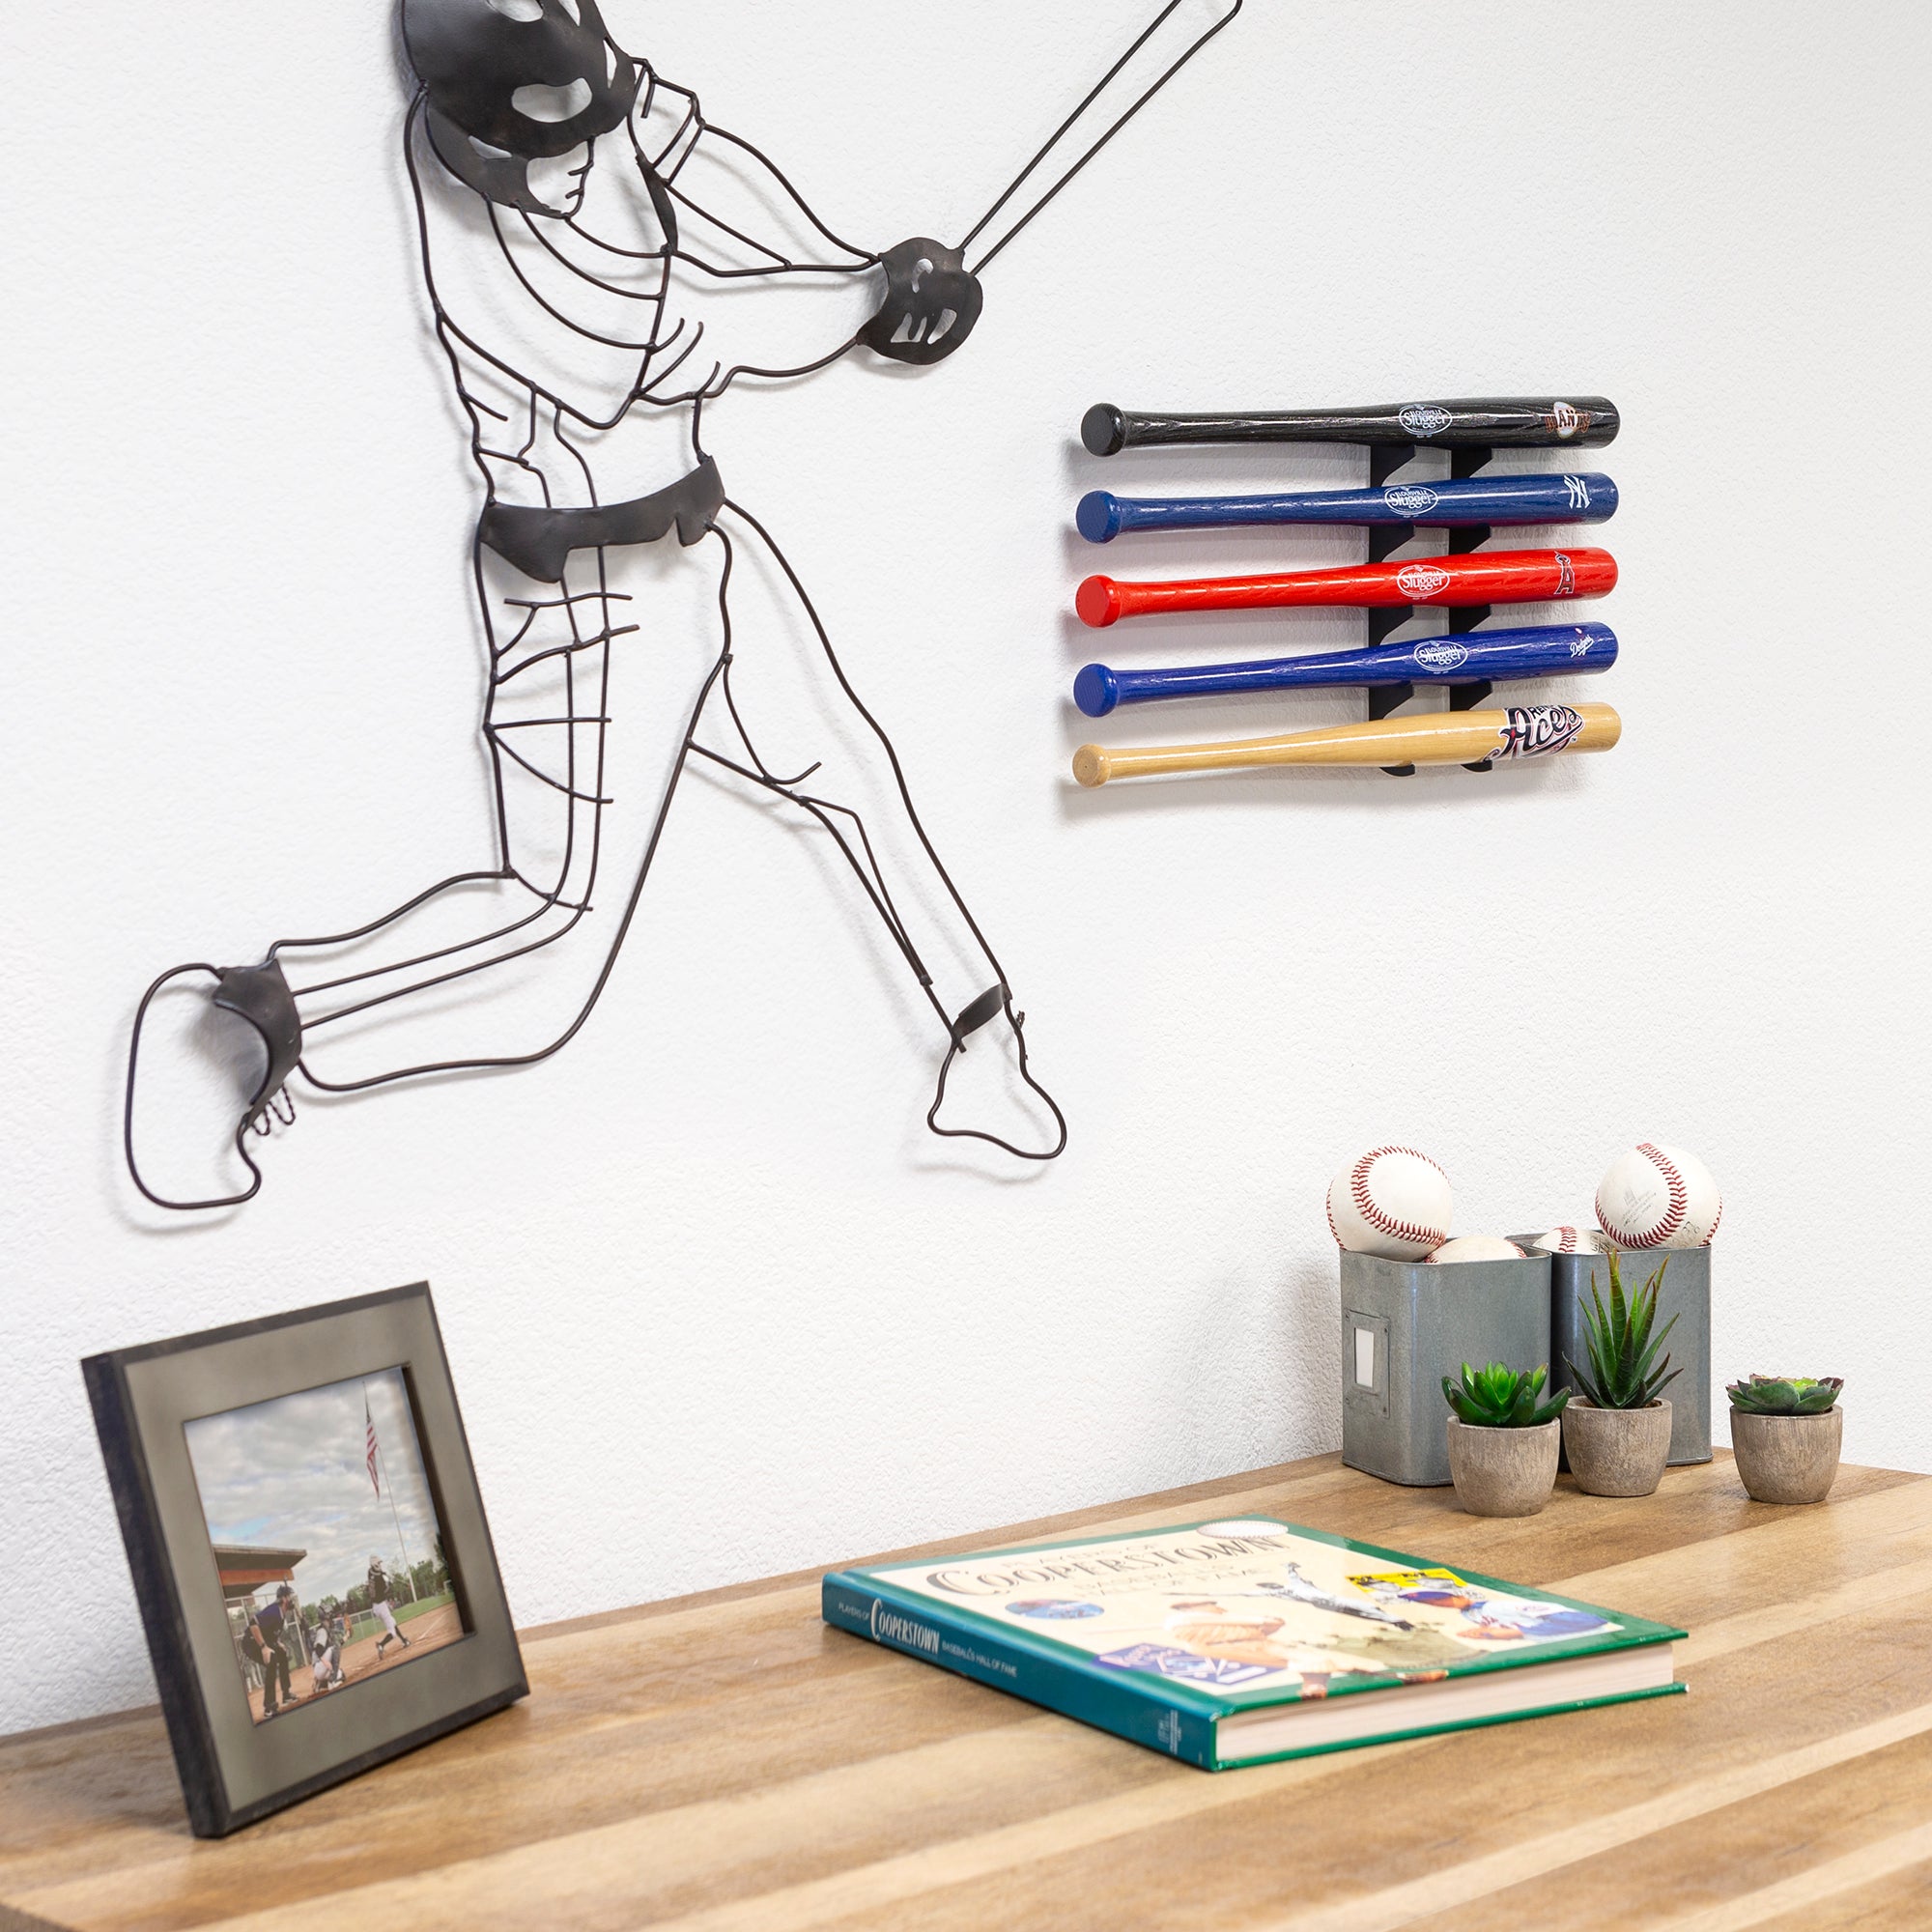 HIDEit Mini Baseball Bat Mount hanging in a room with baseball bats.